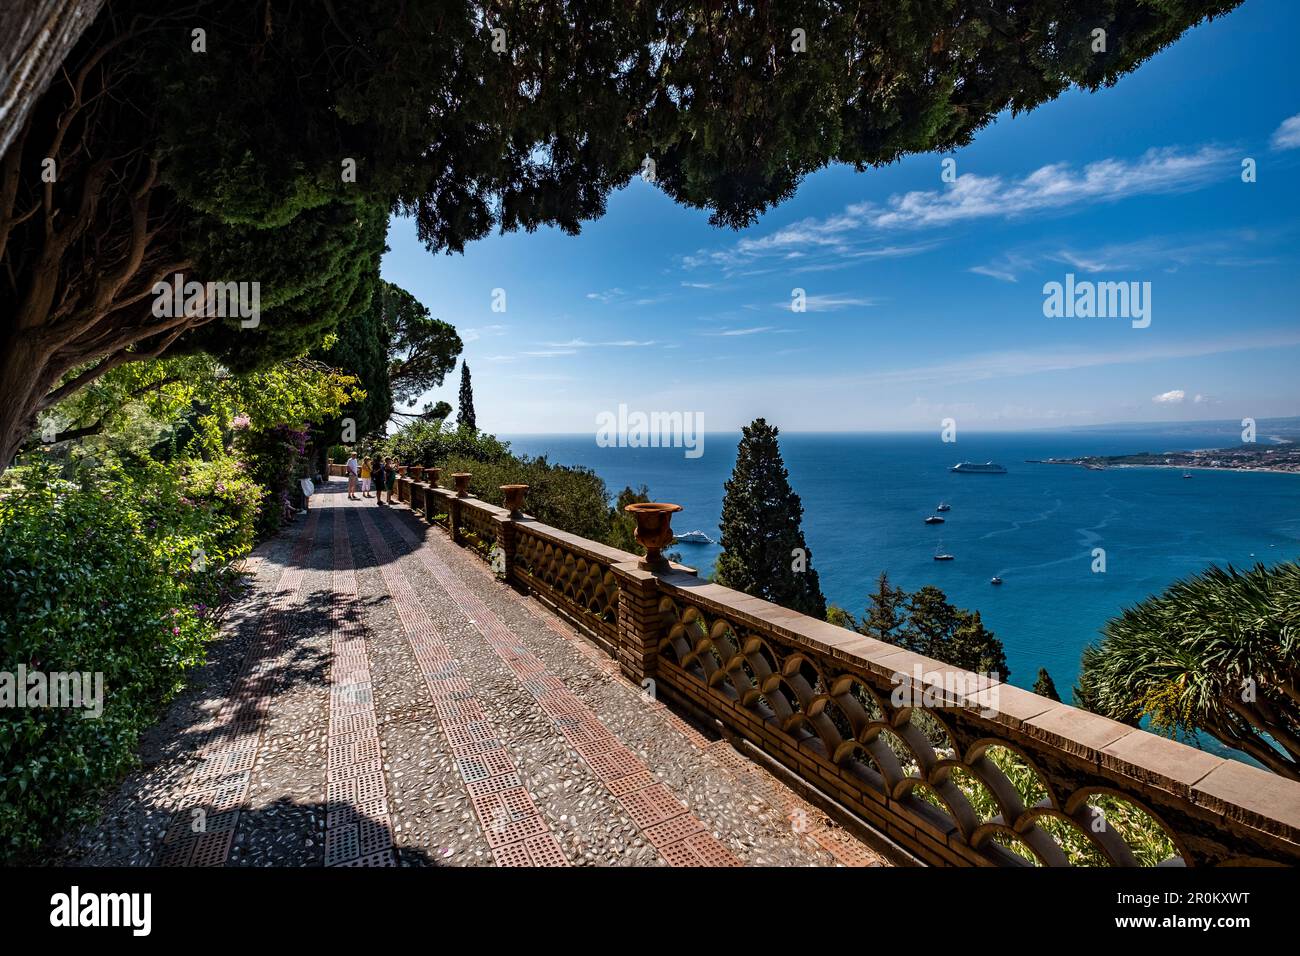 Giardini della Villa Comunale with view to the sea at Taormina, Sicily, South Italy, Italy Stock Photo